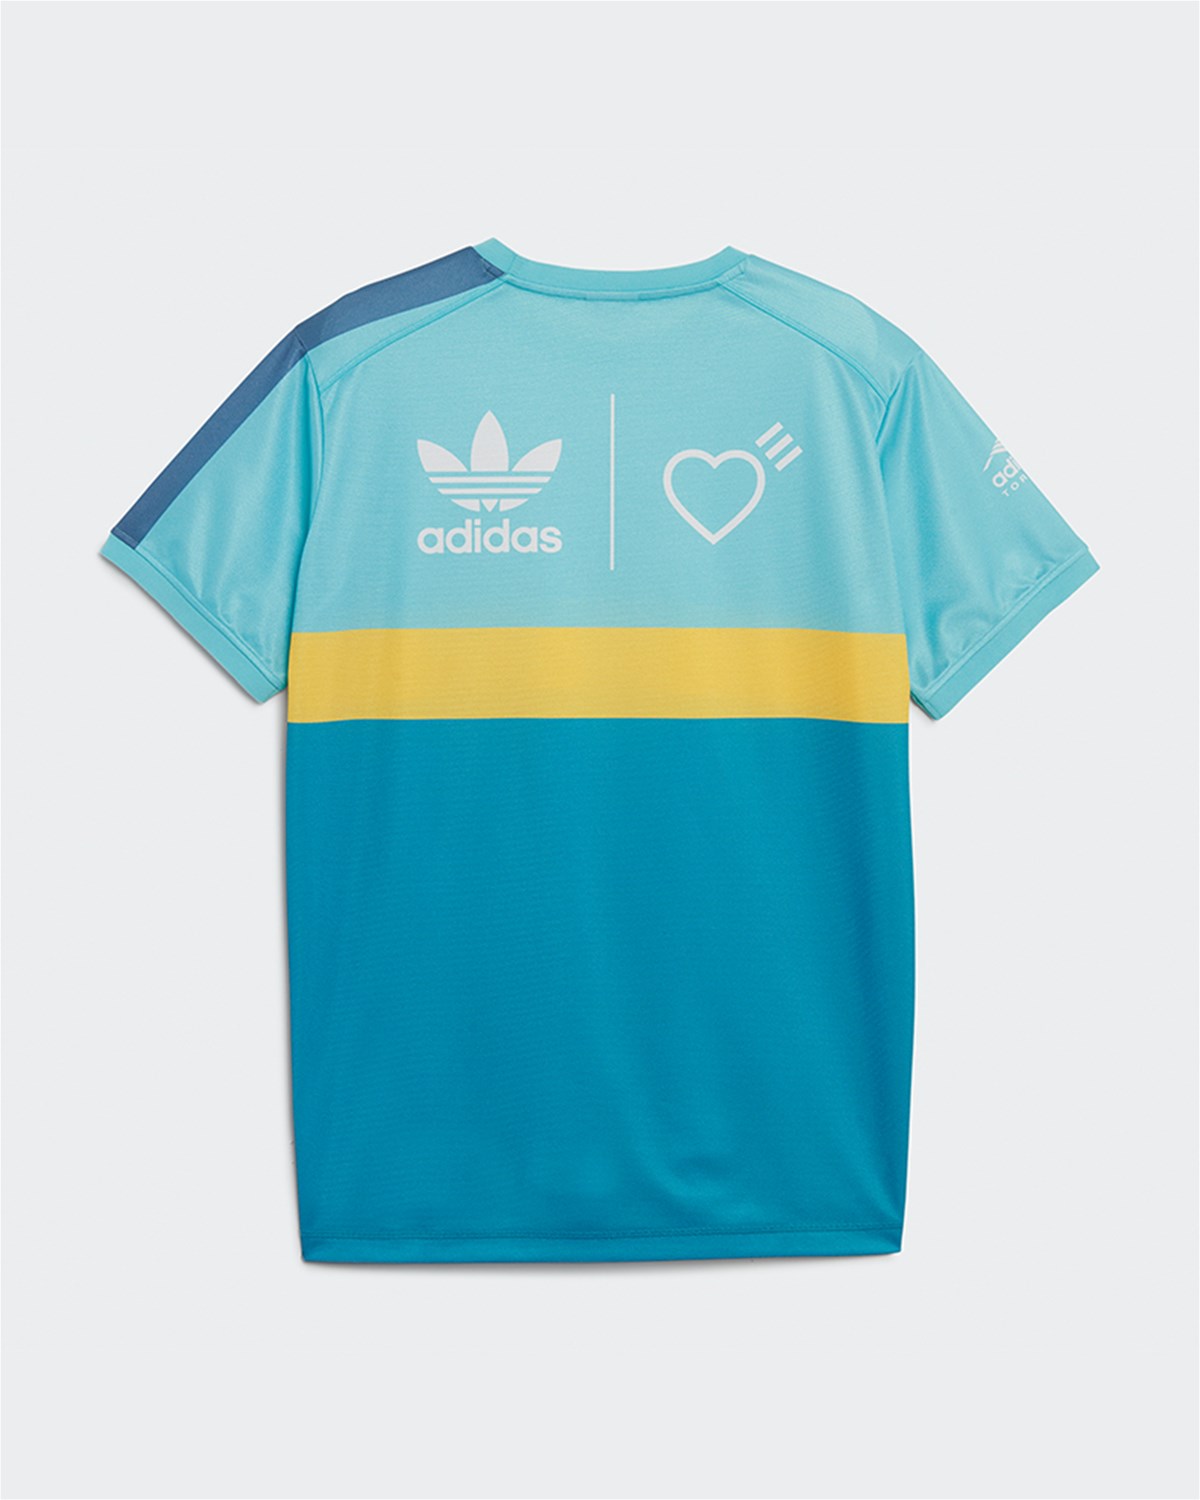 Graphic Tee Human Made Adidas Consortium Tops T-Shirts Blue